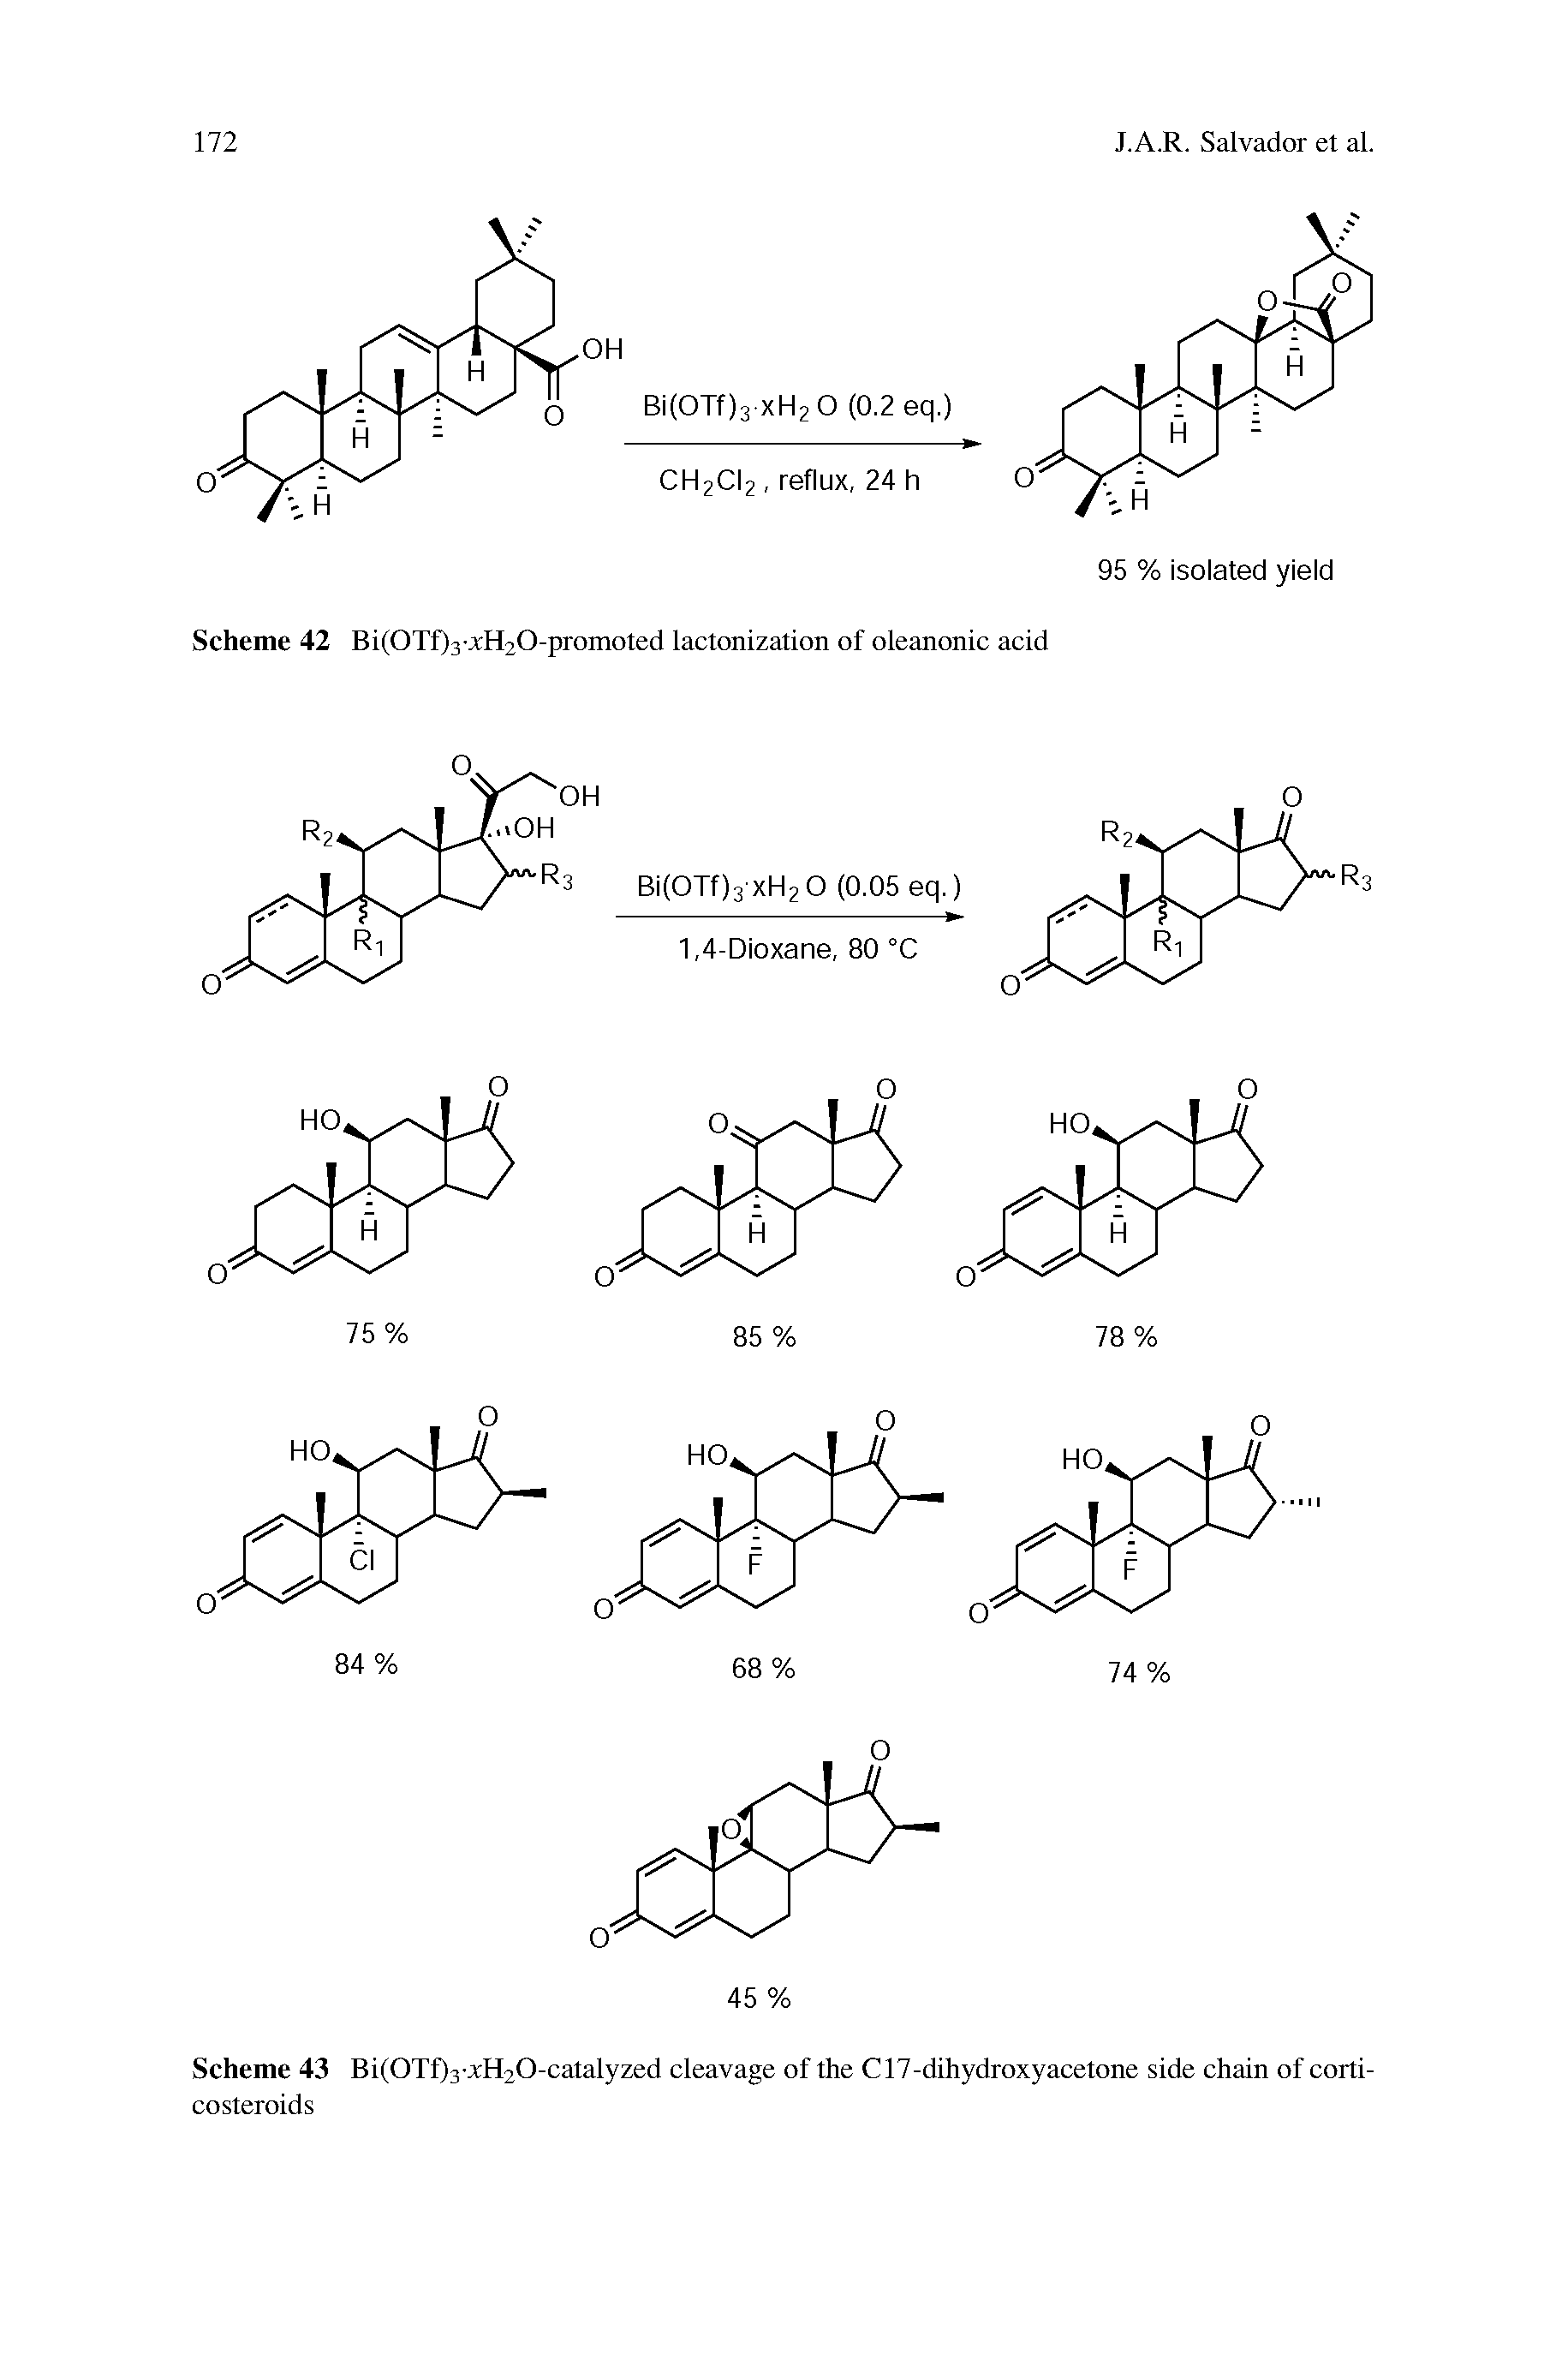 Scheme 43 Bi(0Tf)3-xH20-catalyzed cleavage of the C17-dihydroxyacetone side chain of corticosteroids...